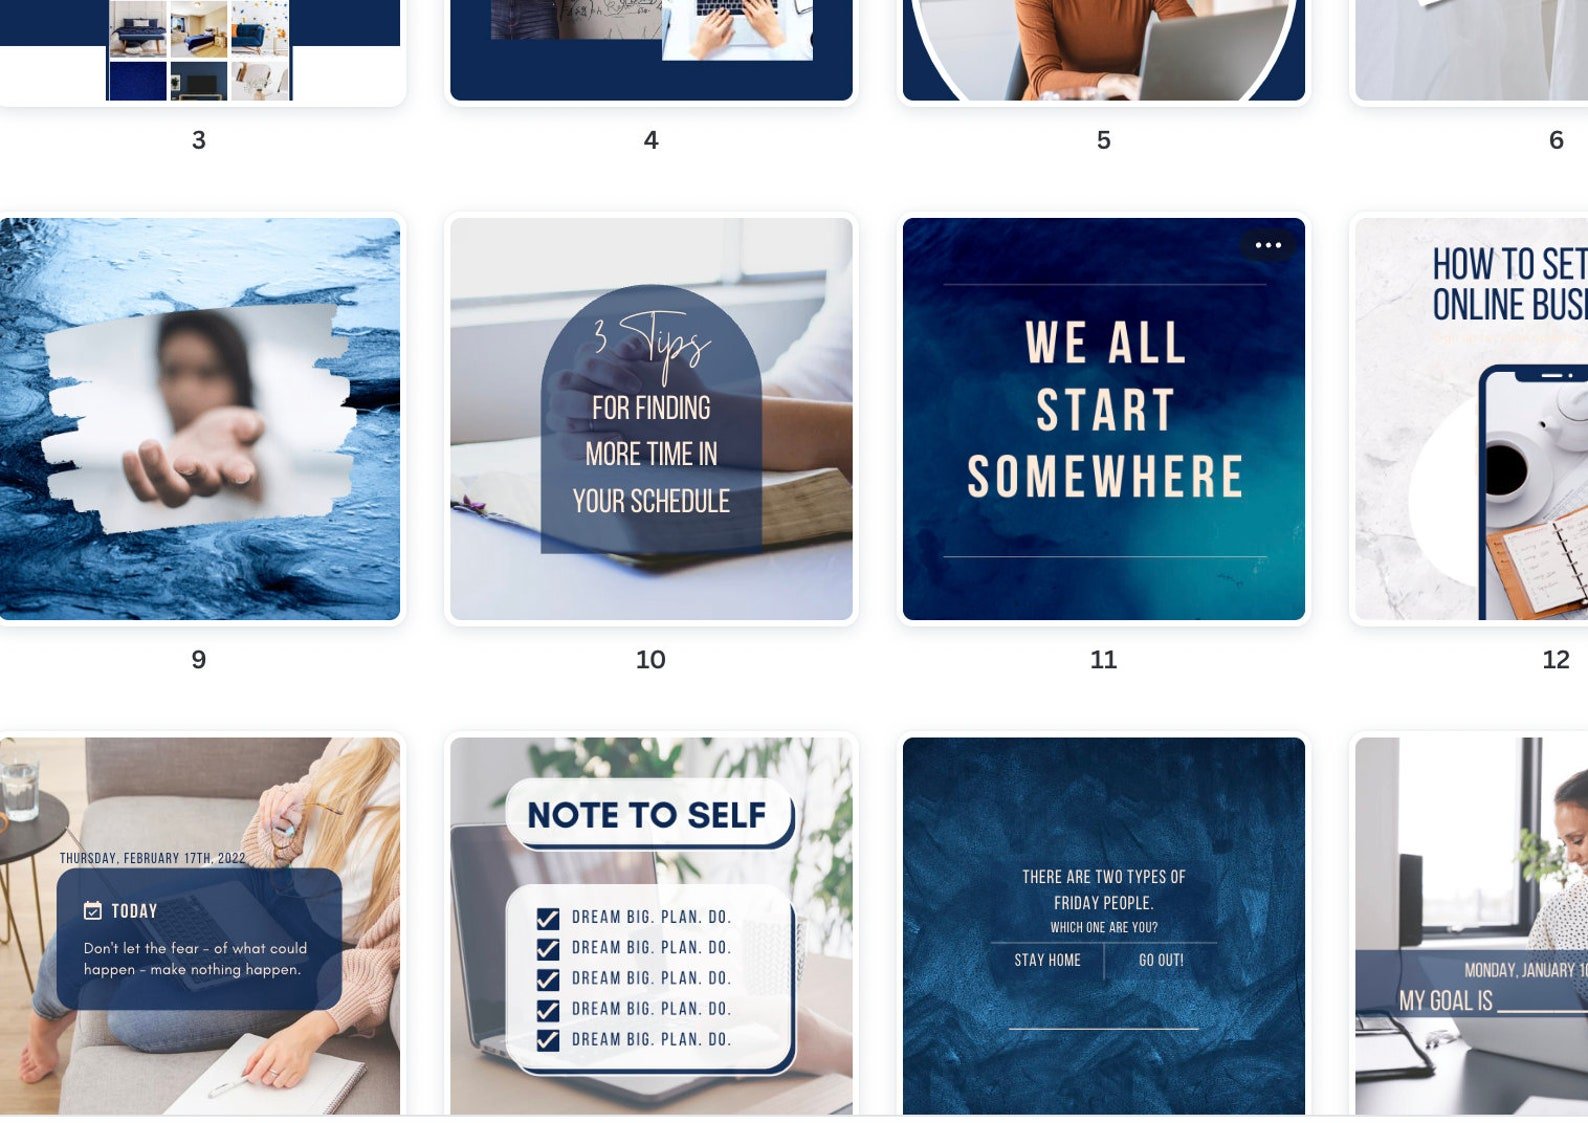 Canva Luxury Social Media Templates | Instagram | Pinterest | Navy Blue modern templates | Fully editable | 50 templates